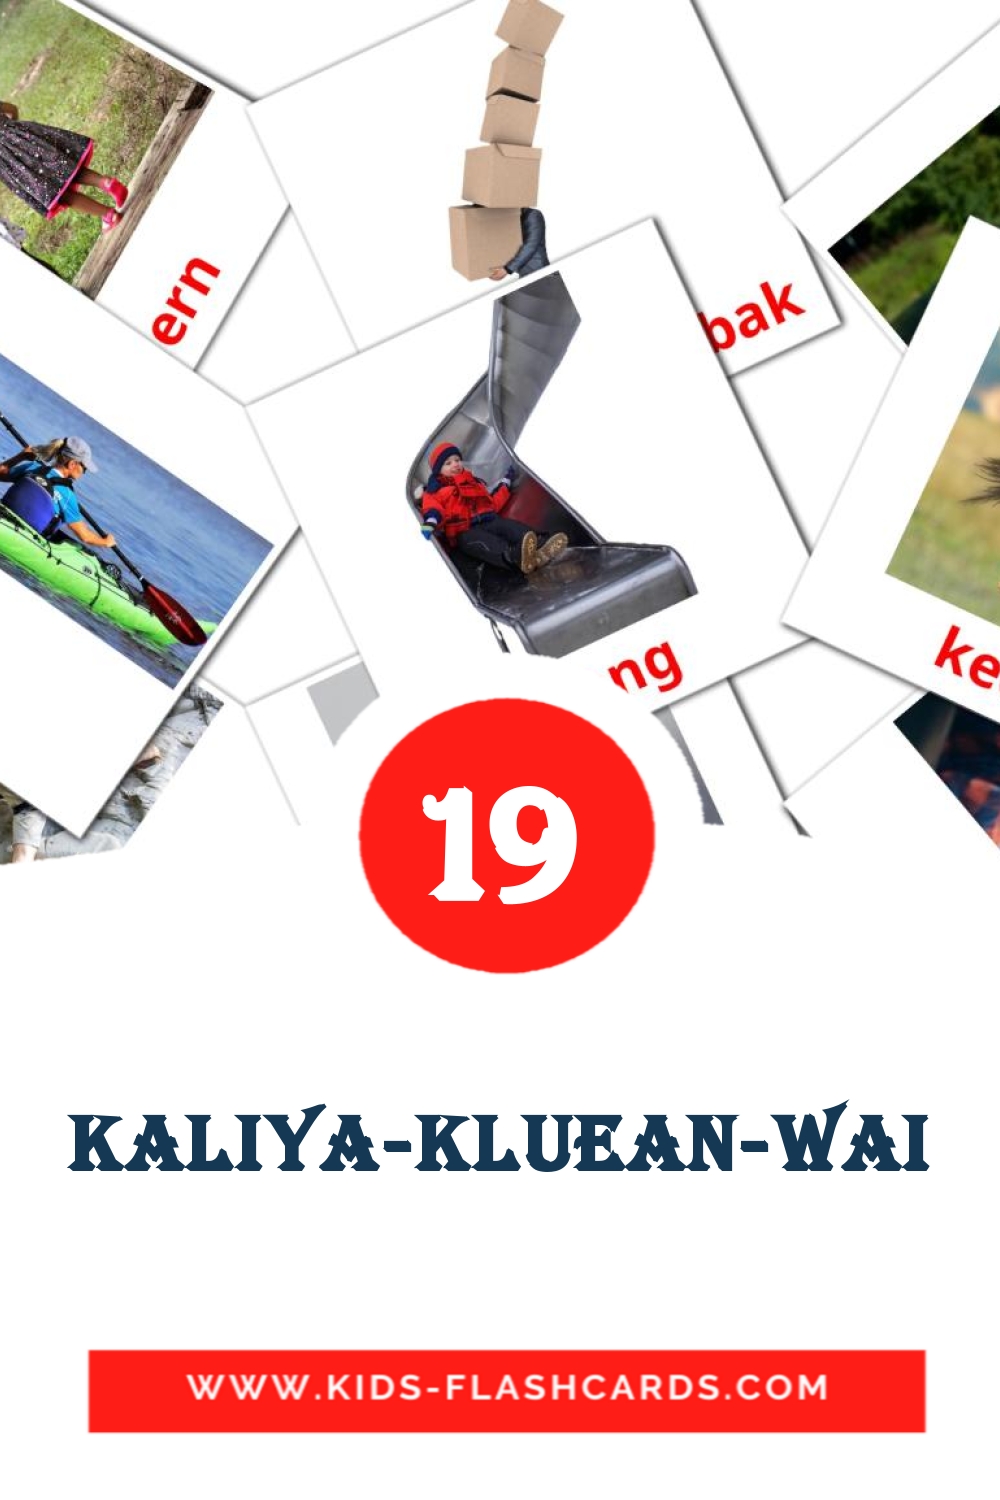 19 carte illustrate di Kaliya-kluean-wai per la scuola materna in amárica